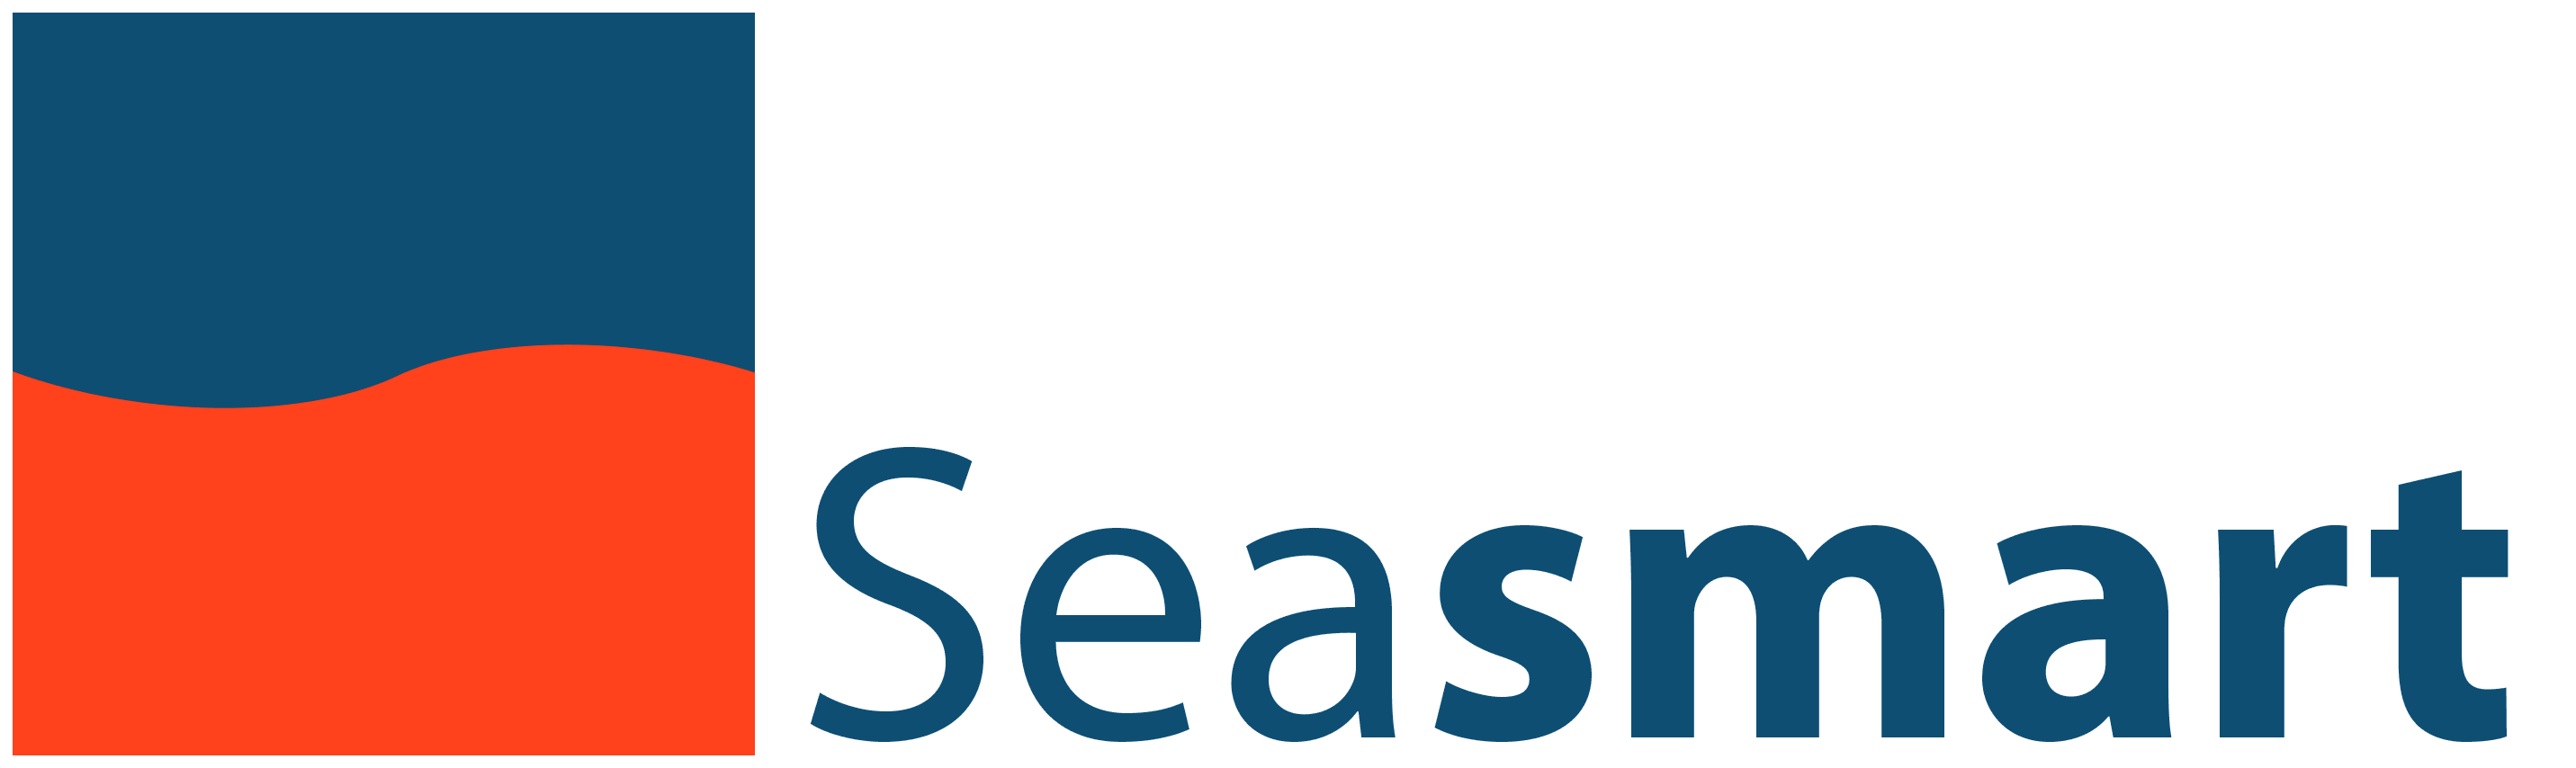 SeaSmart logo